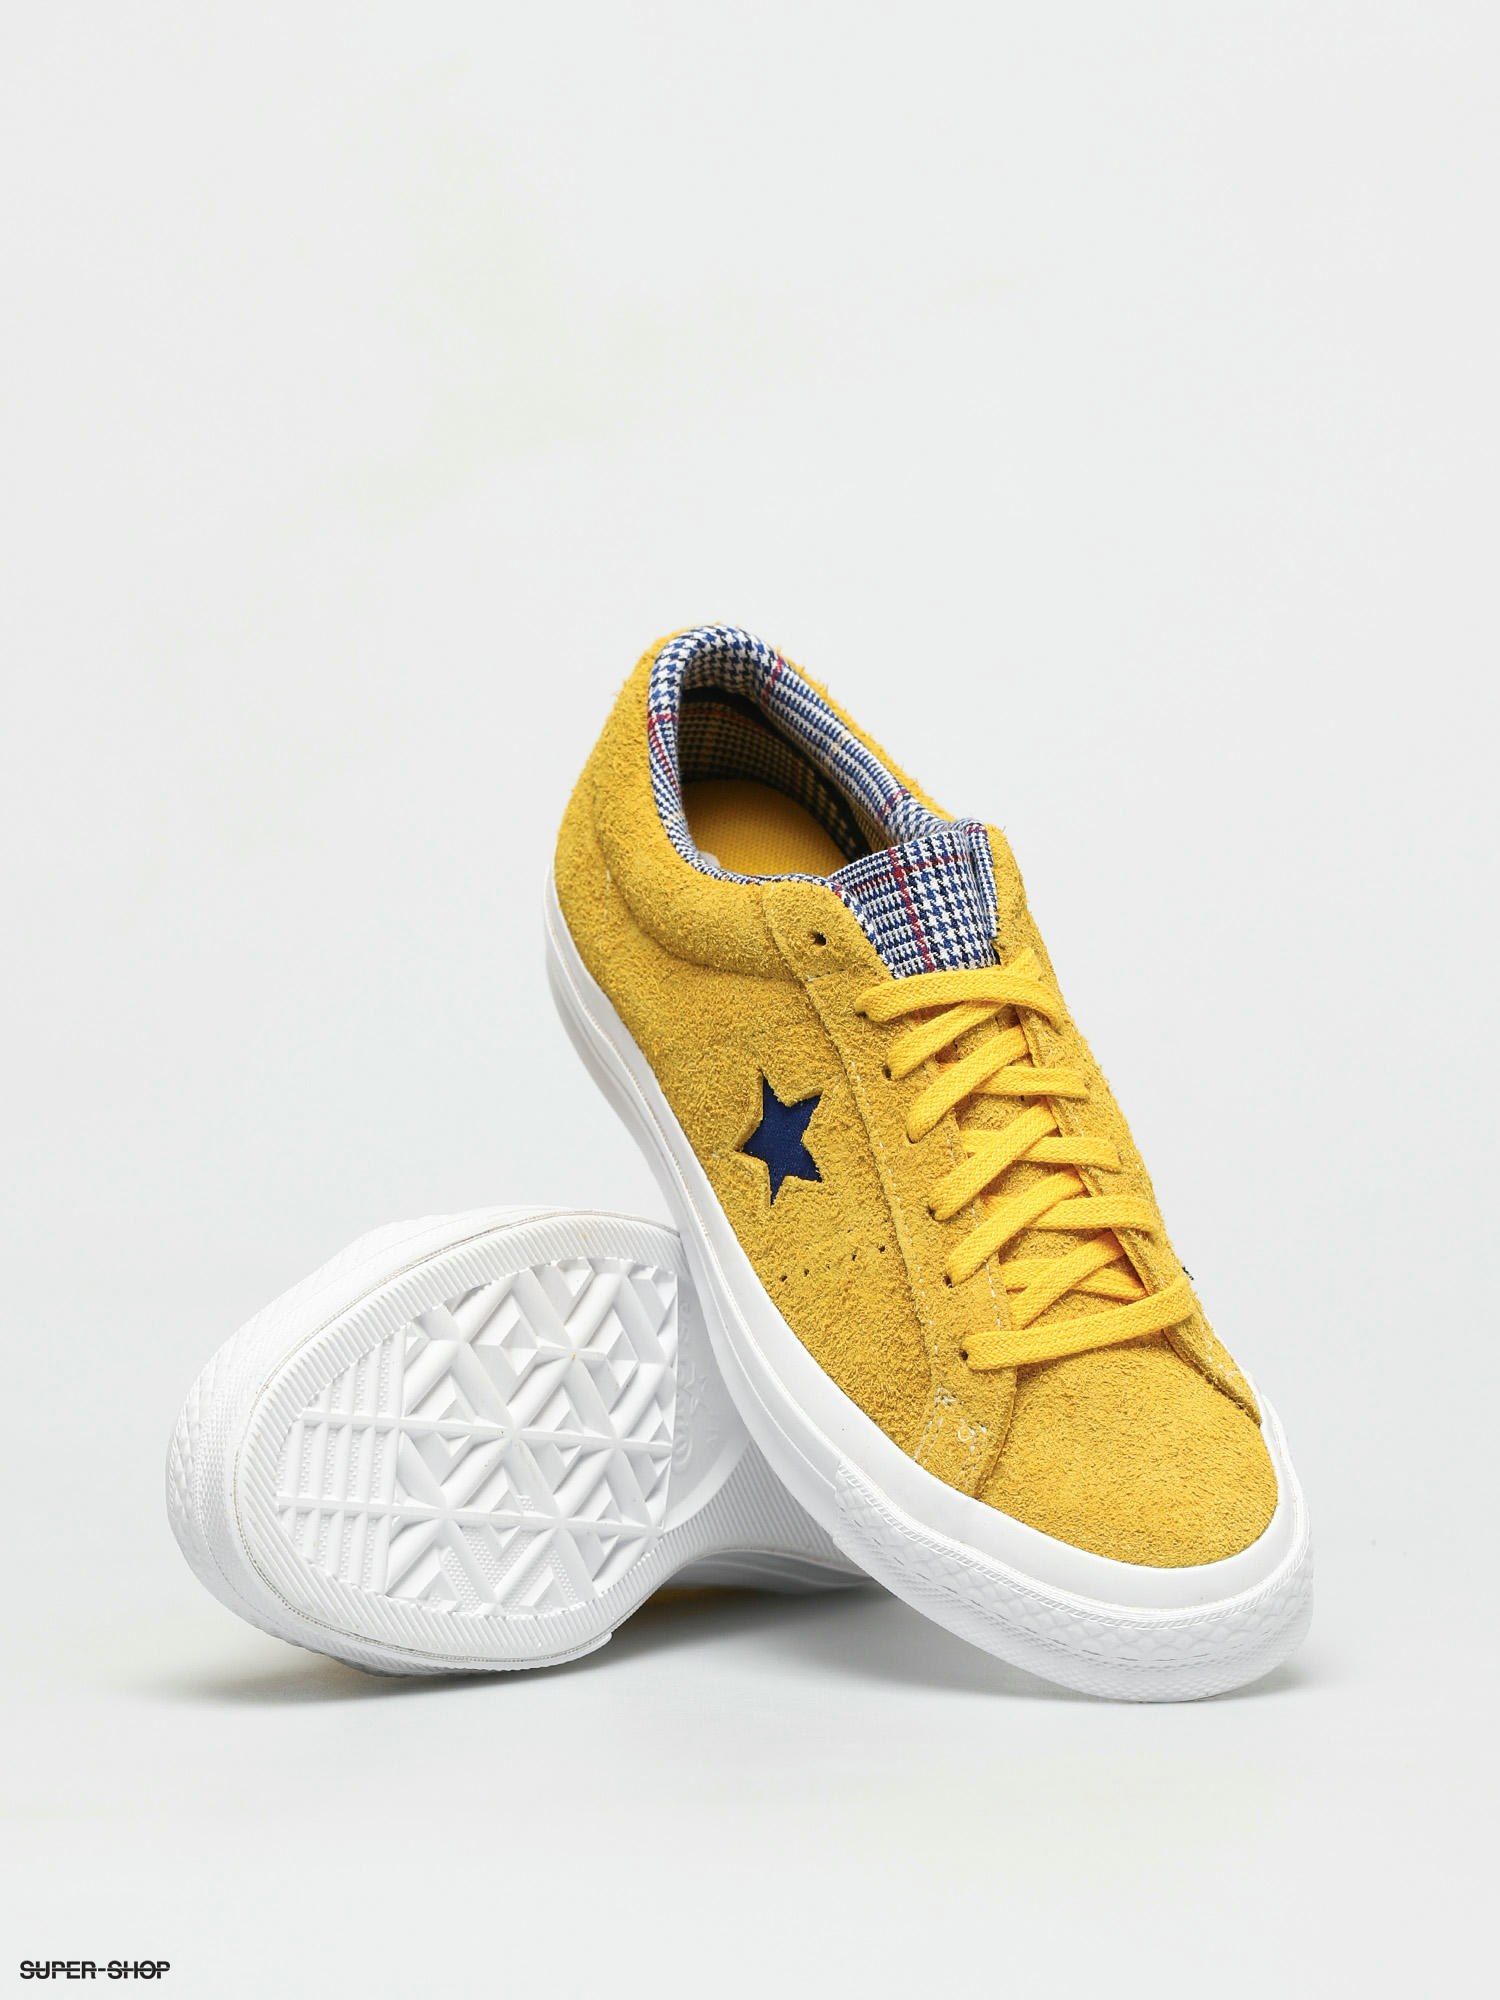 Converse One Star Ox Chucks (banana yellow)